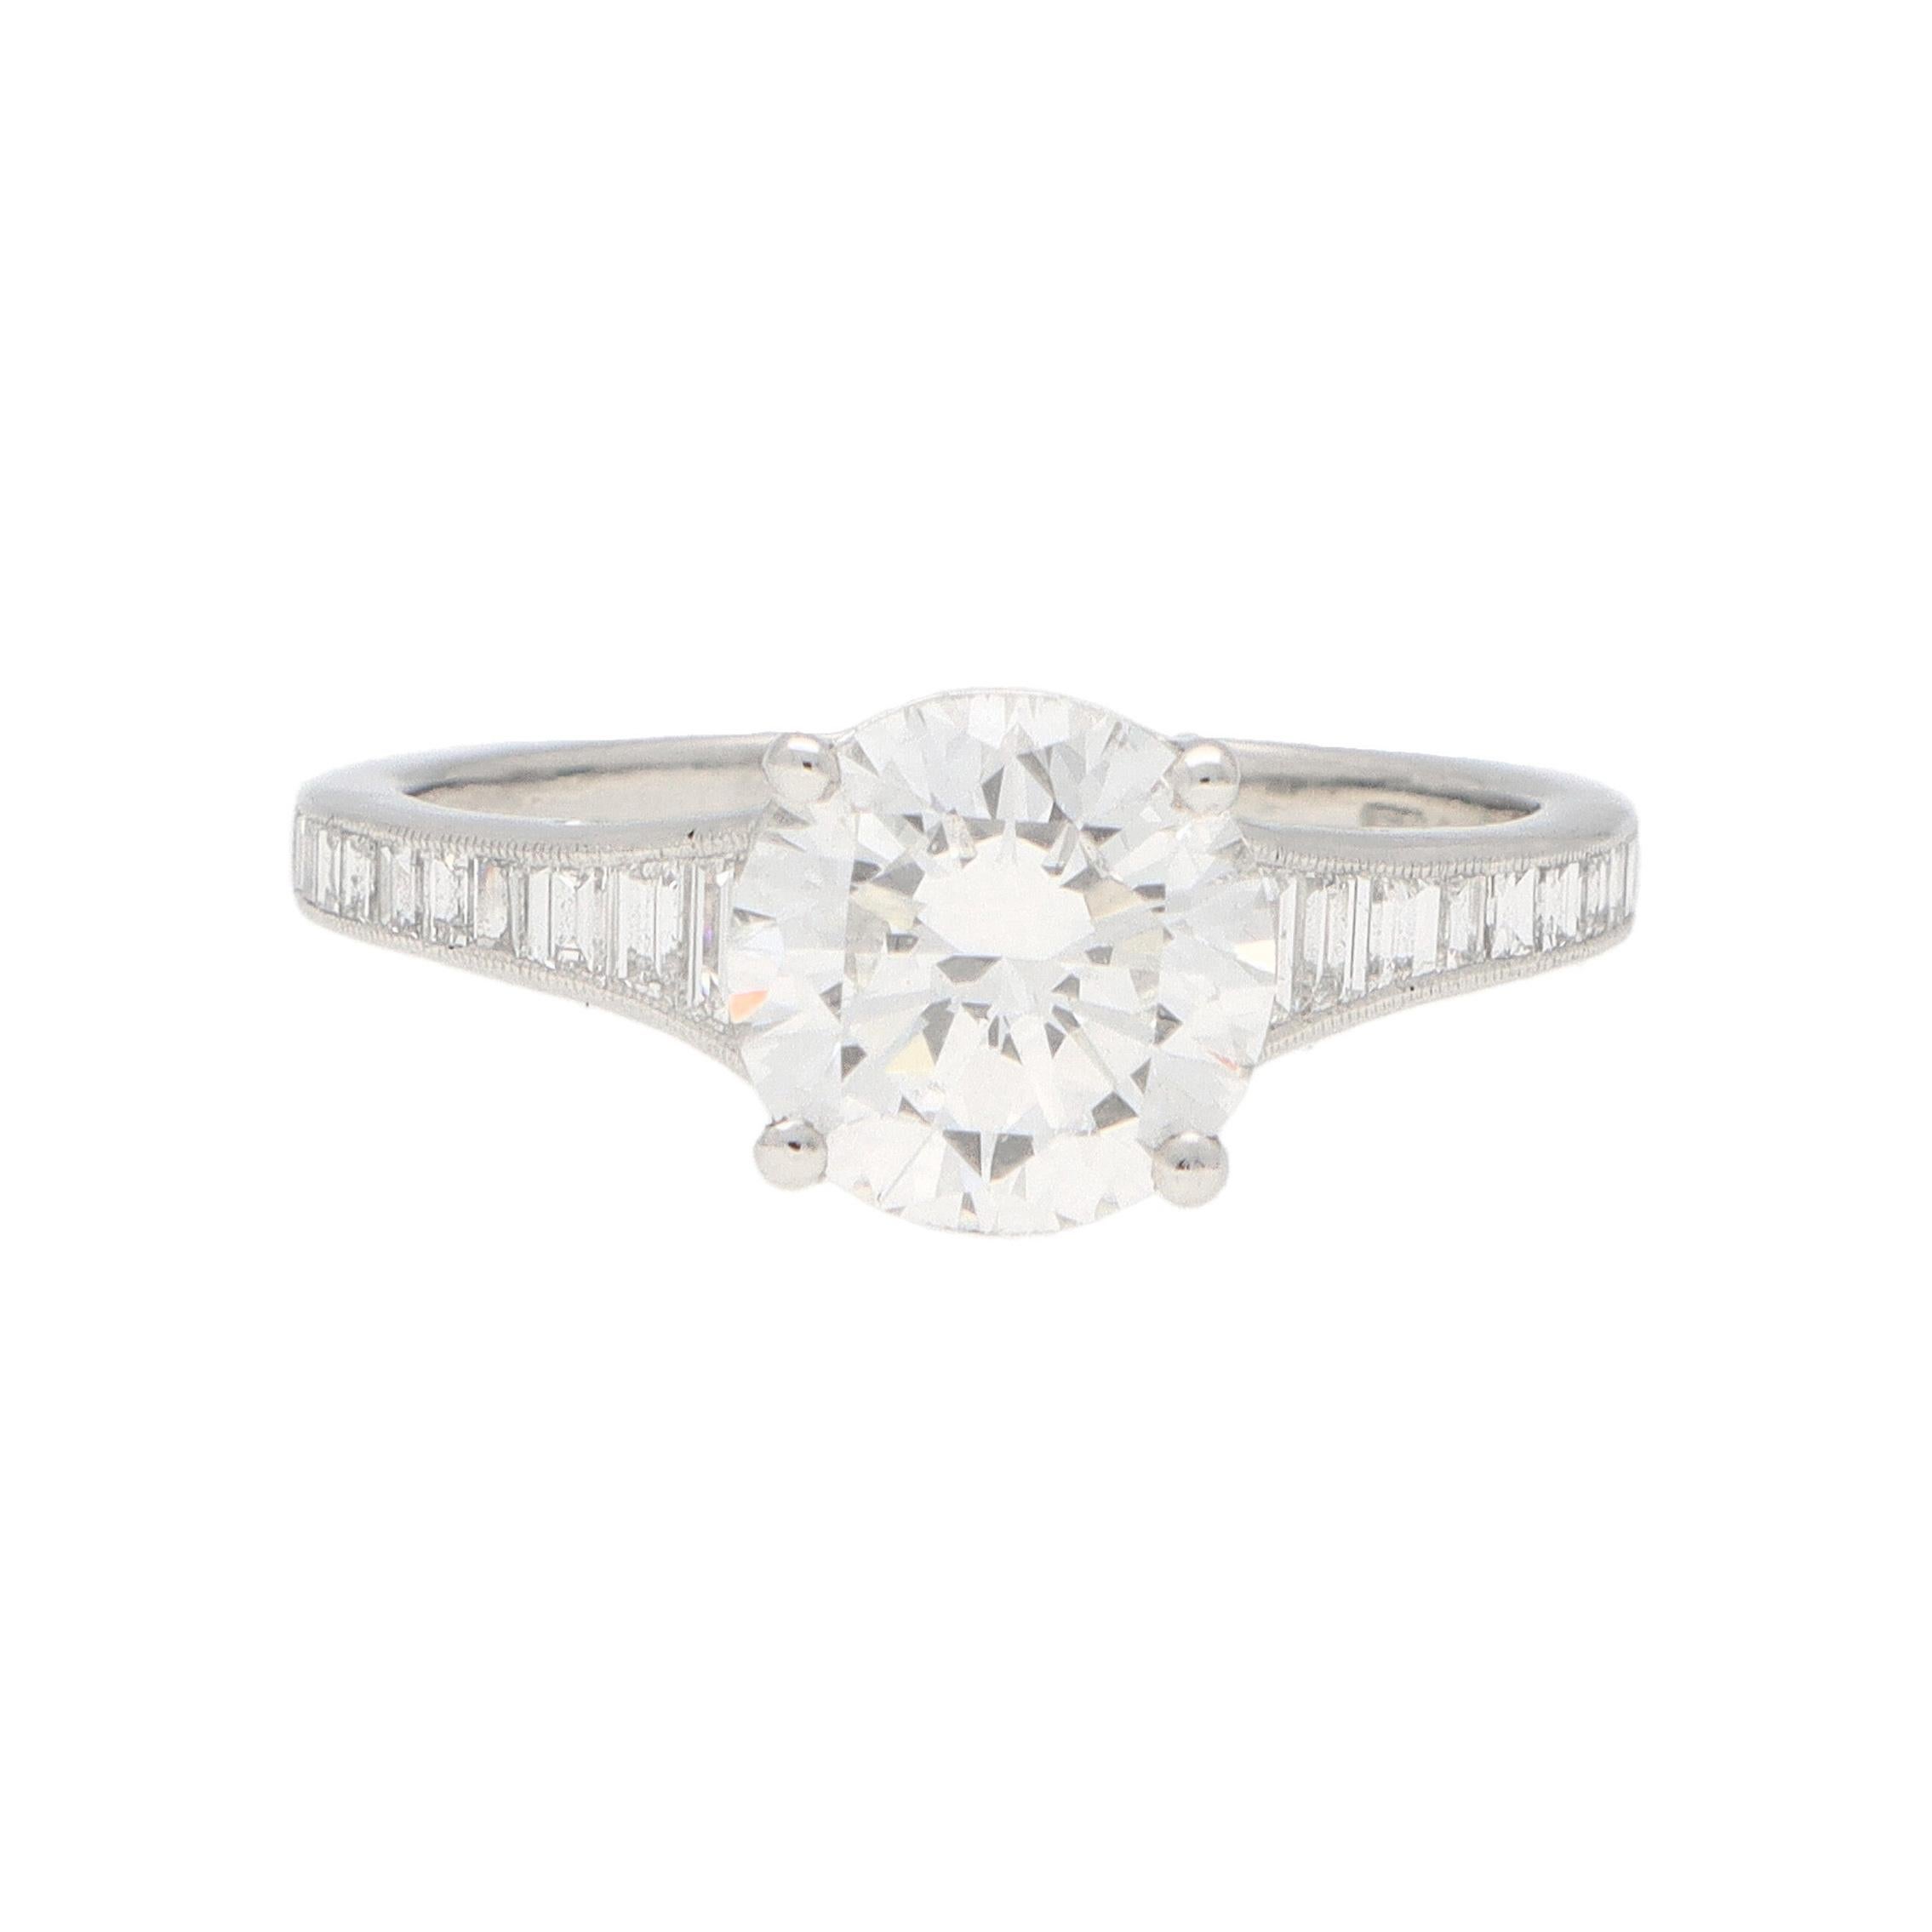 GIA Certified Art Deco Inspired Diamond Engagement Ring Set in Platinum